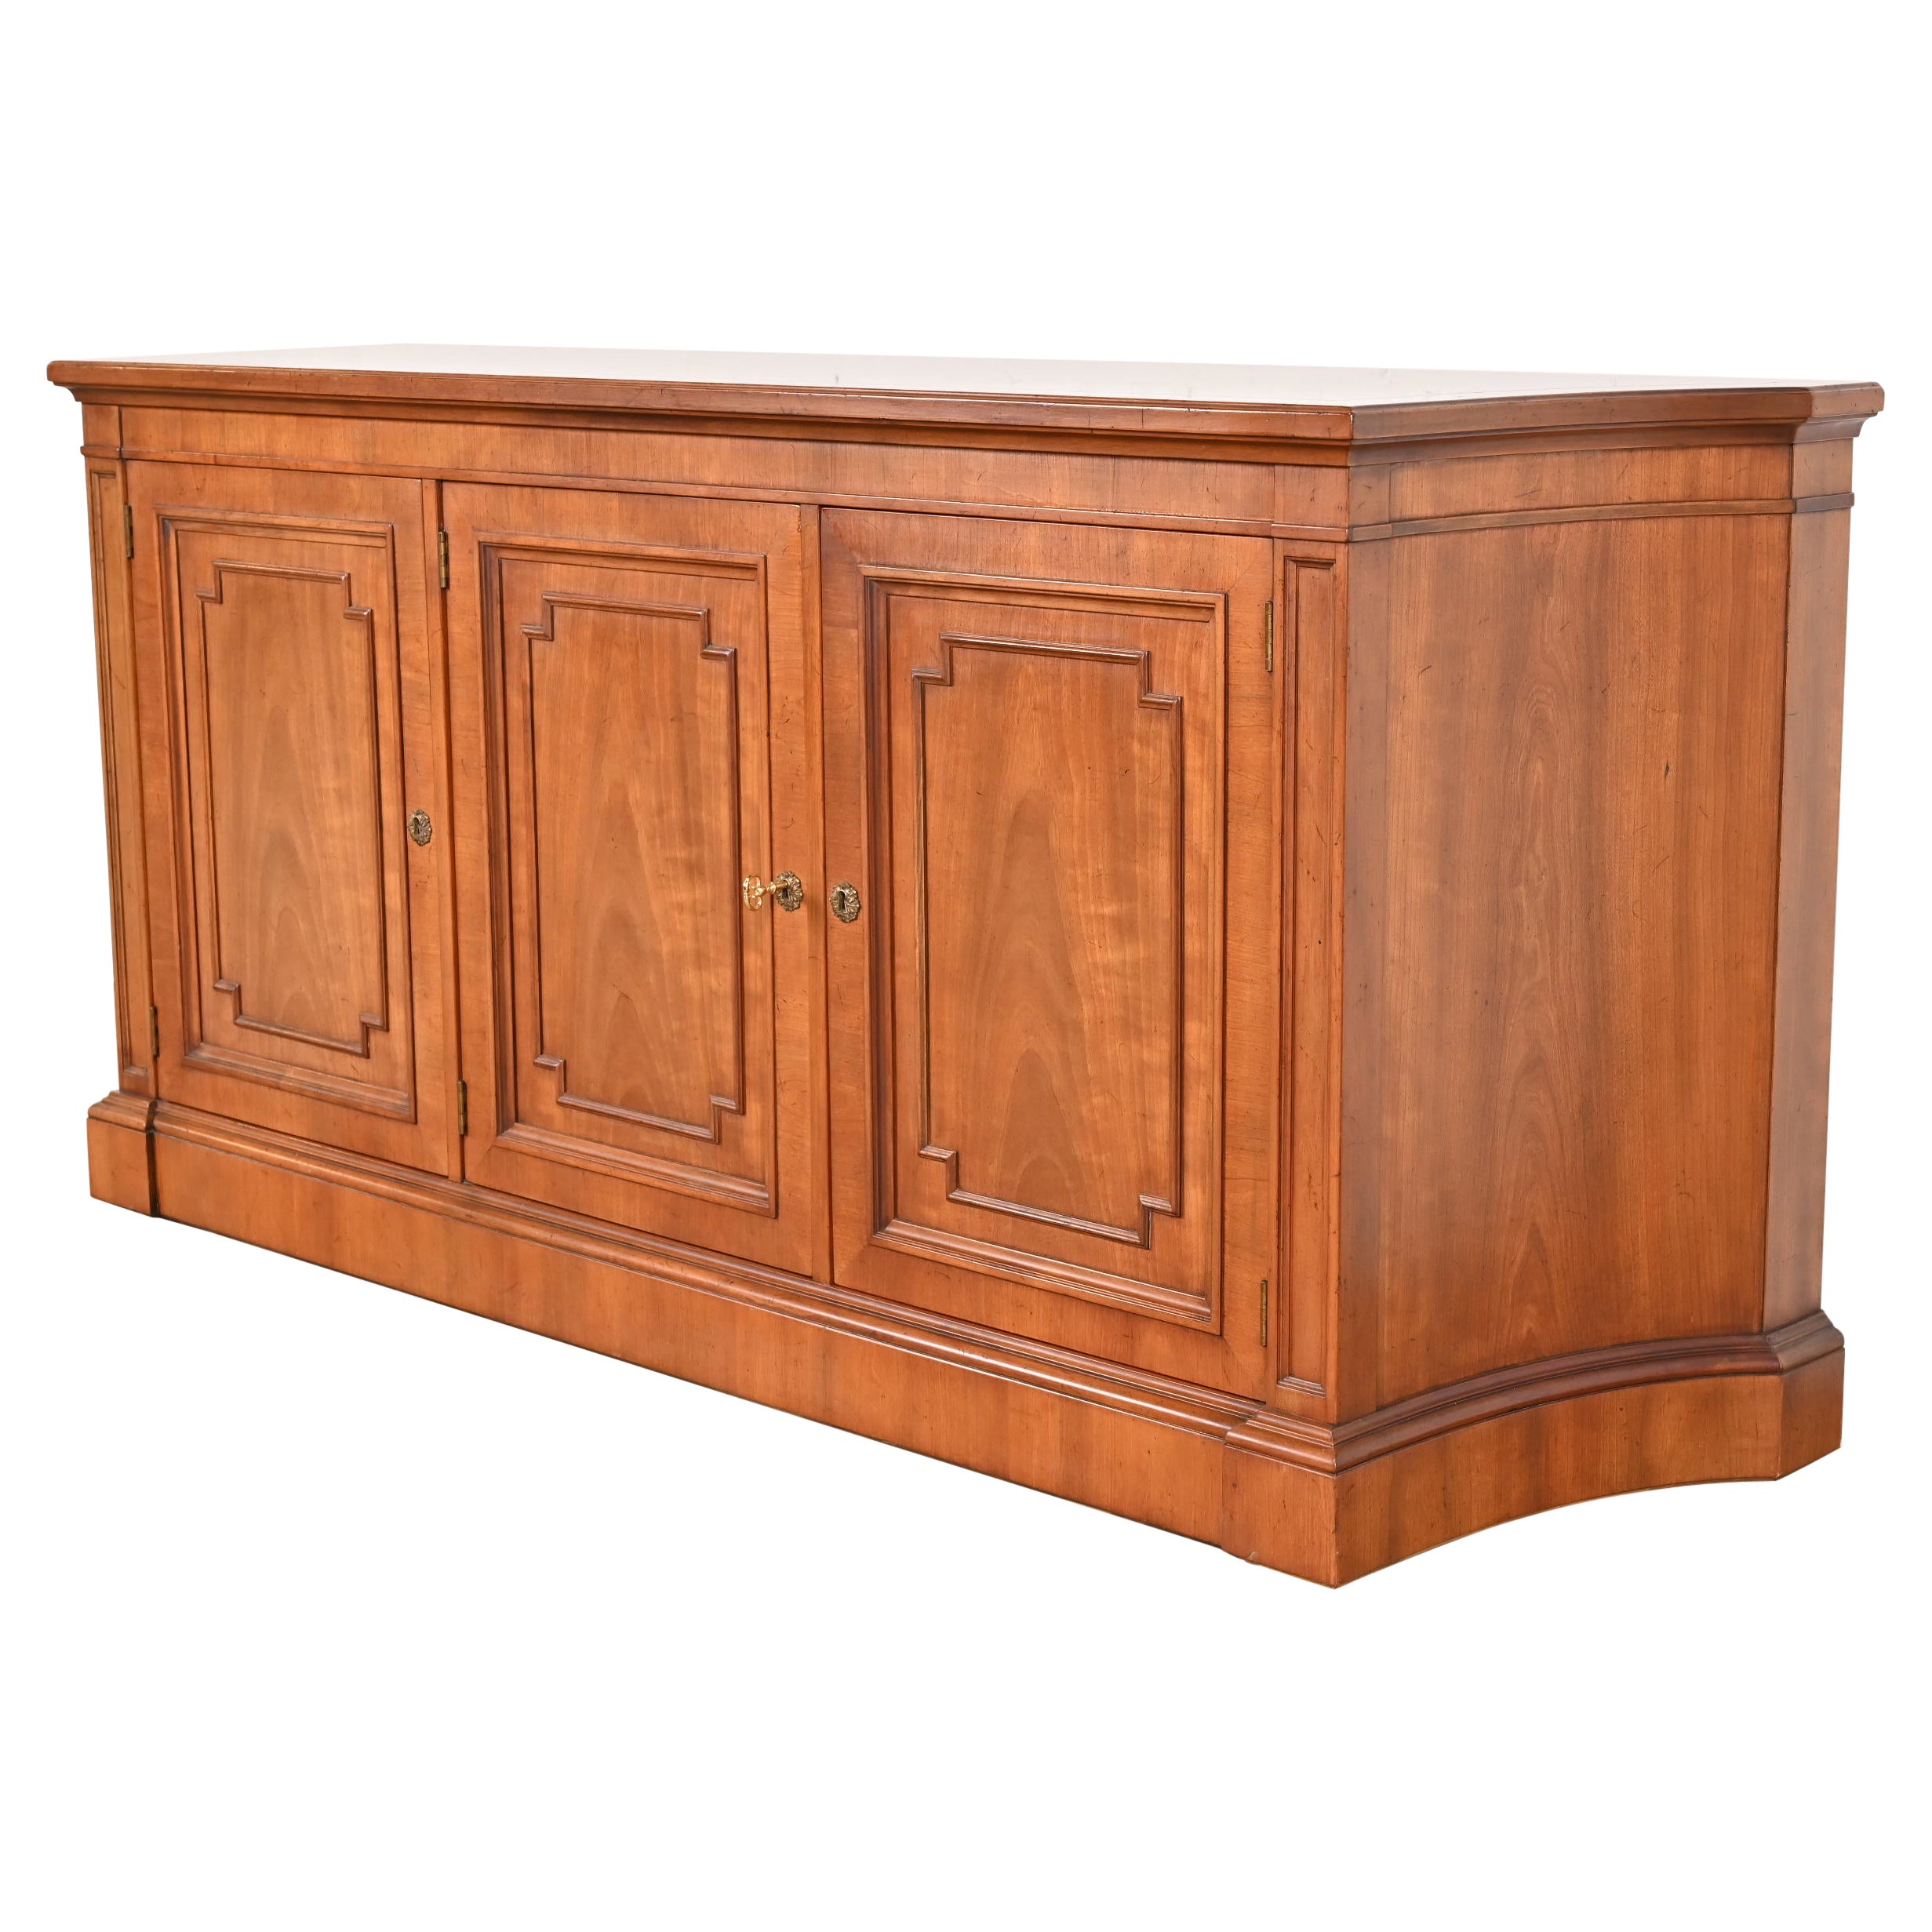 Kindel Furniture French Regency Louis XVI Cherry Wood Sideboard or Bar Cabinet For Sale